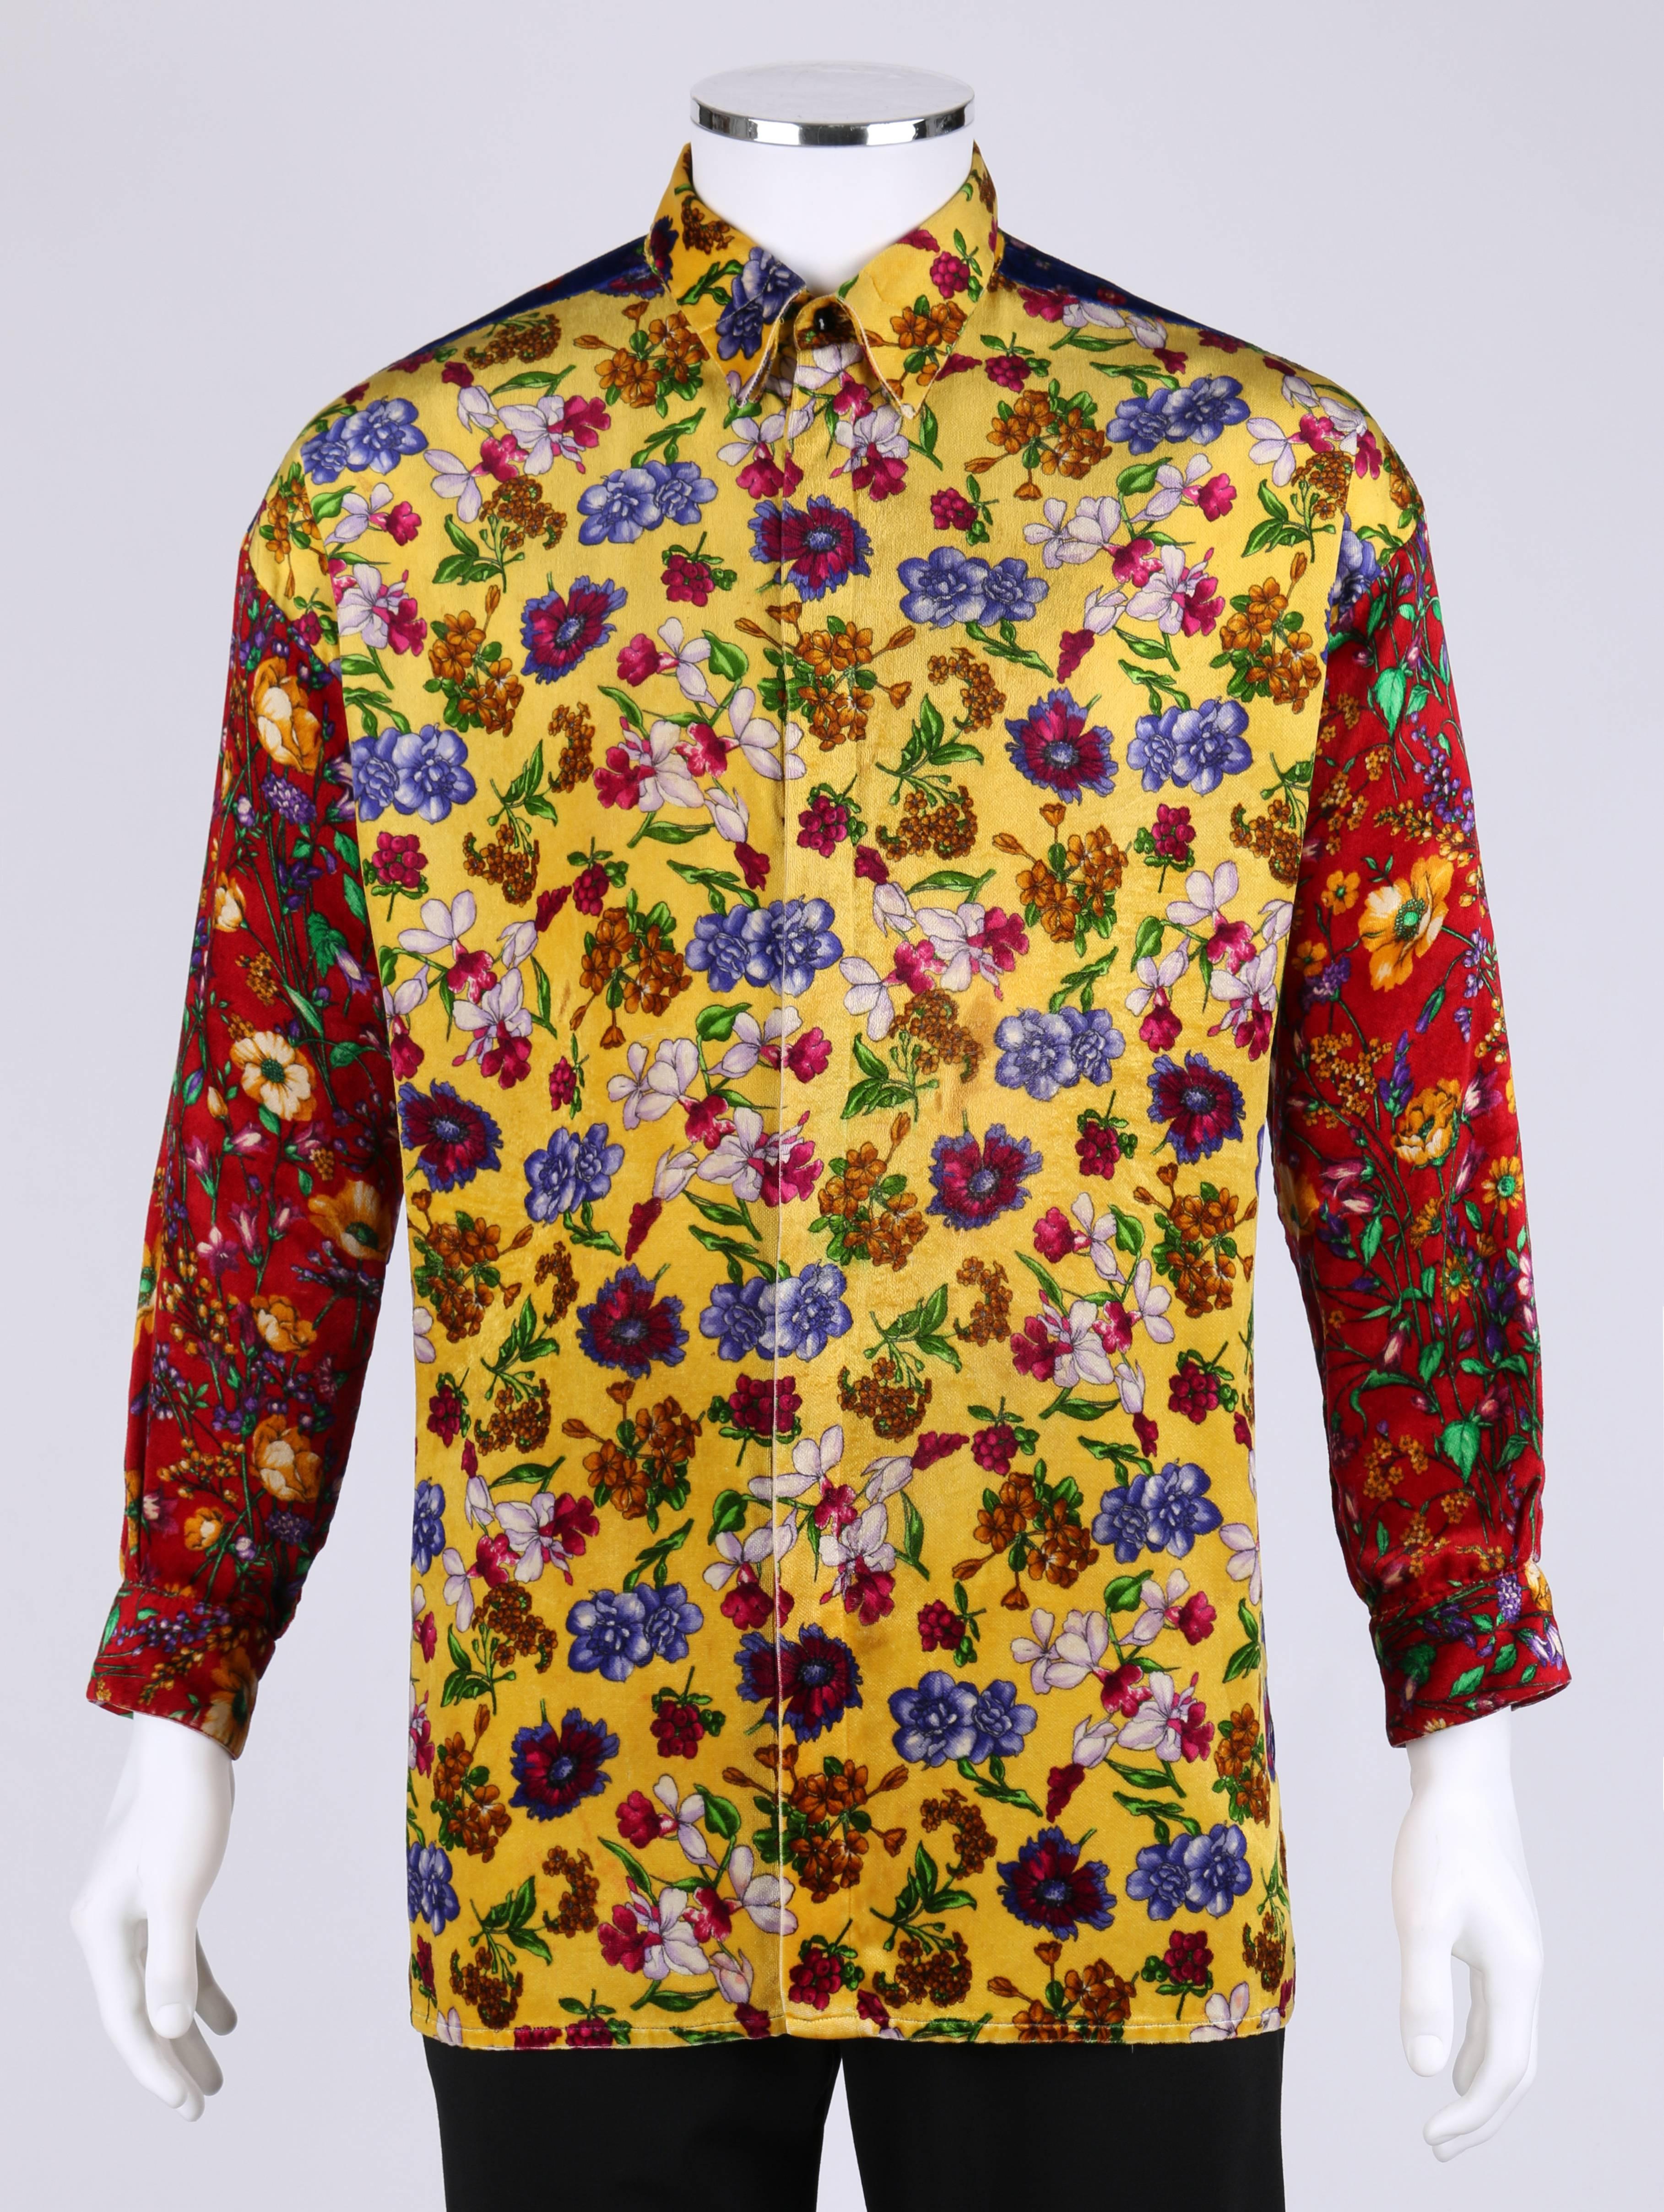 Vintage c.1990's Gianni Versace men's multicolor / color-block floral patchwork velvet button down shirt. Concealed button closure center front. Long sleeves button at cuffs. Unmarked size / fabric content.

Measurements:
Shoulder: 24